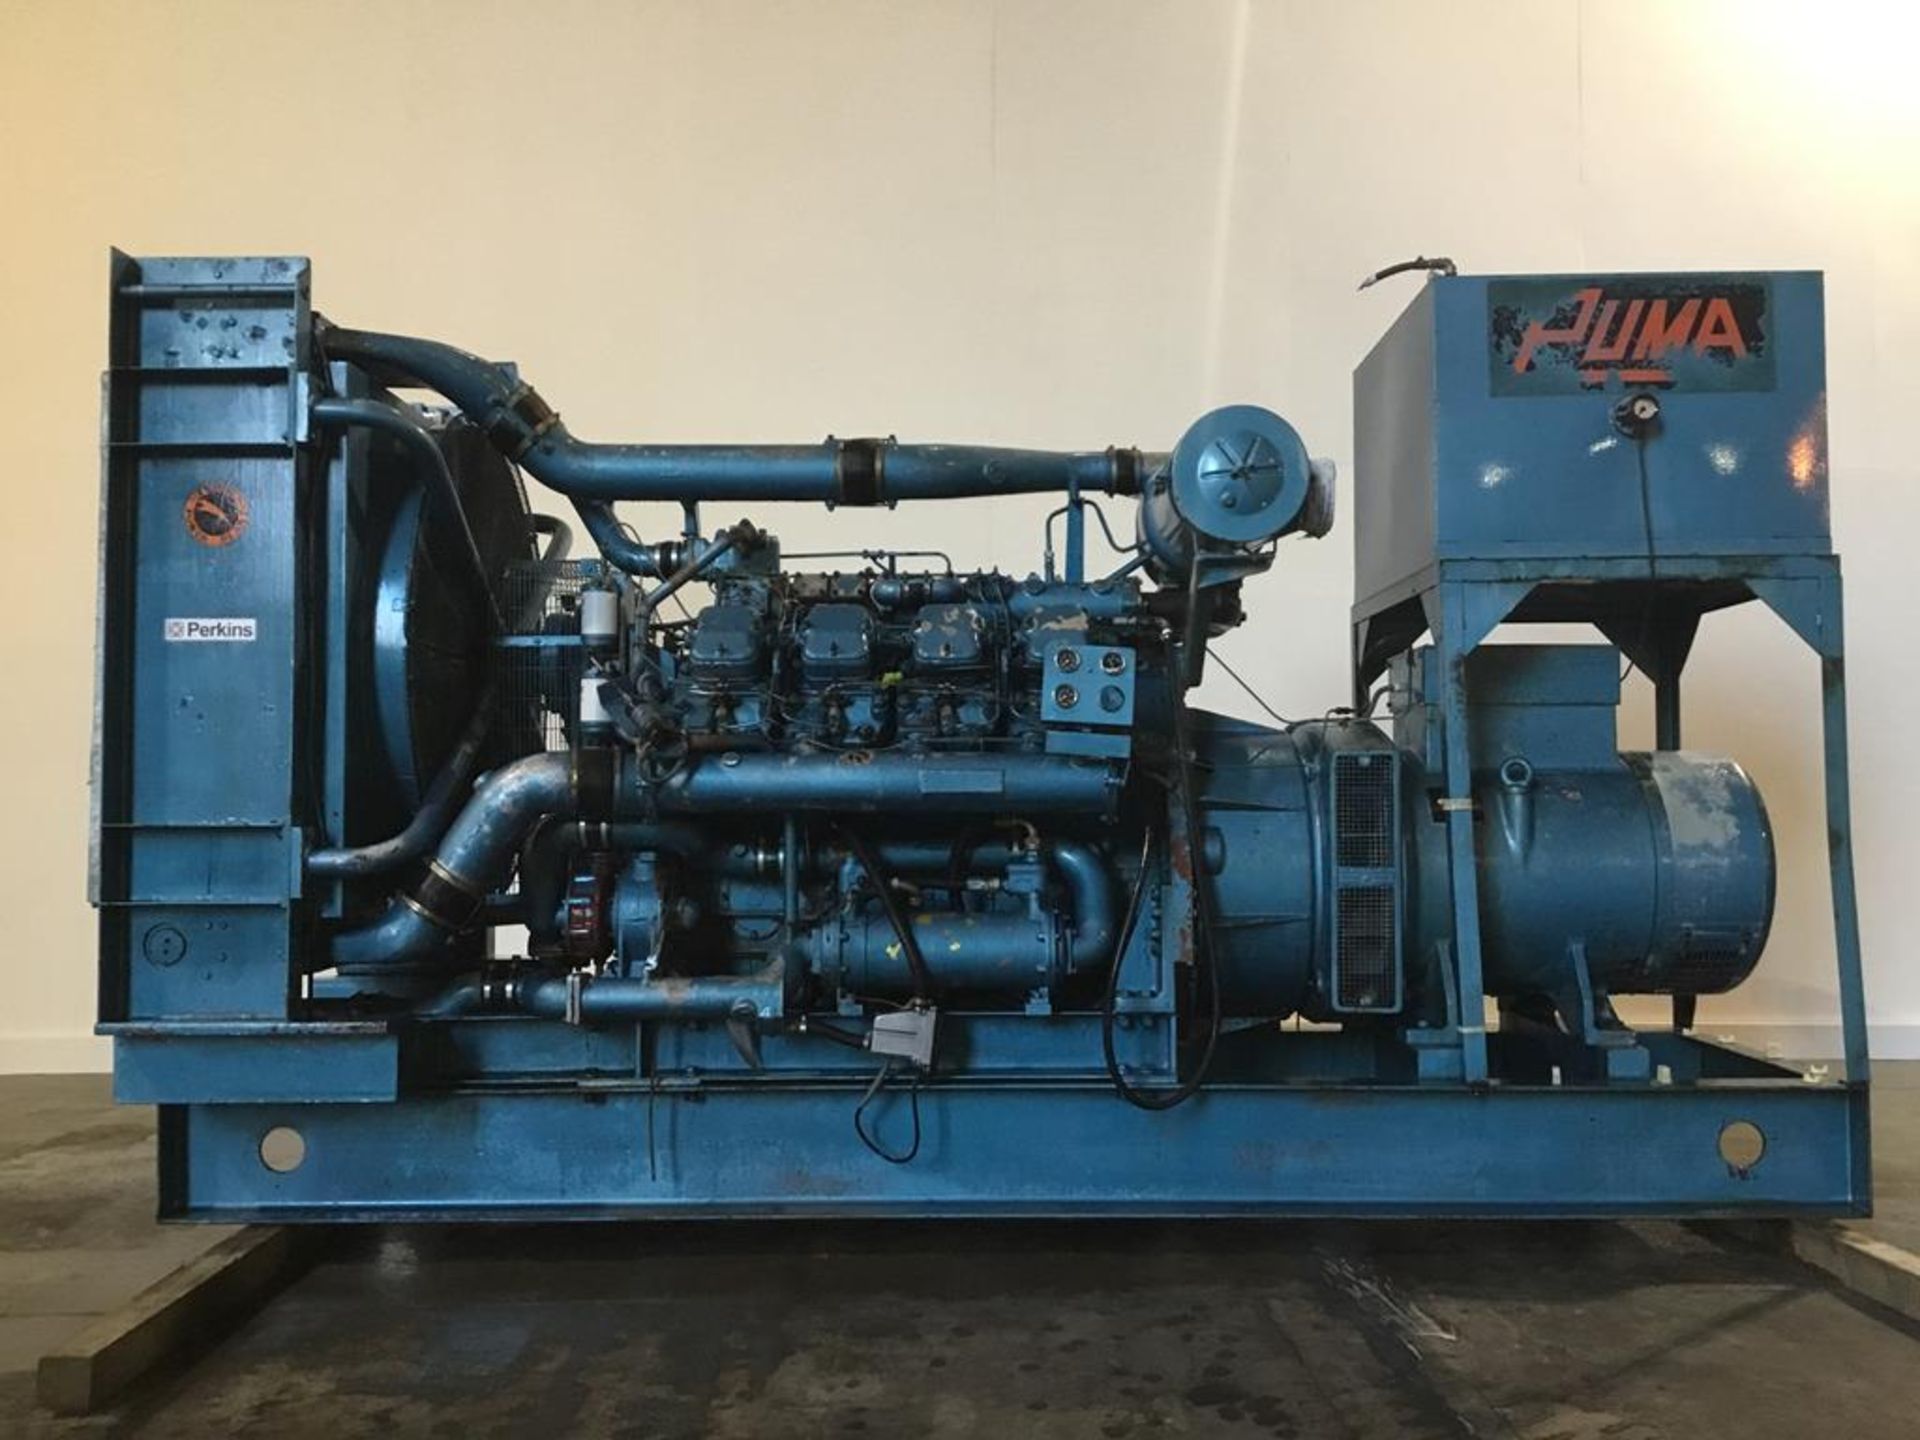 Dorman 395kva Diesel Generator - Image 3 of 11